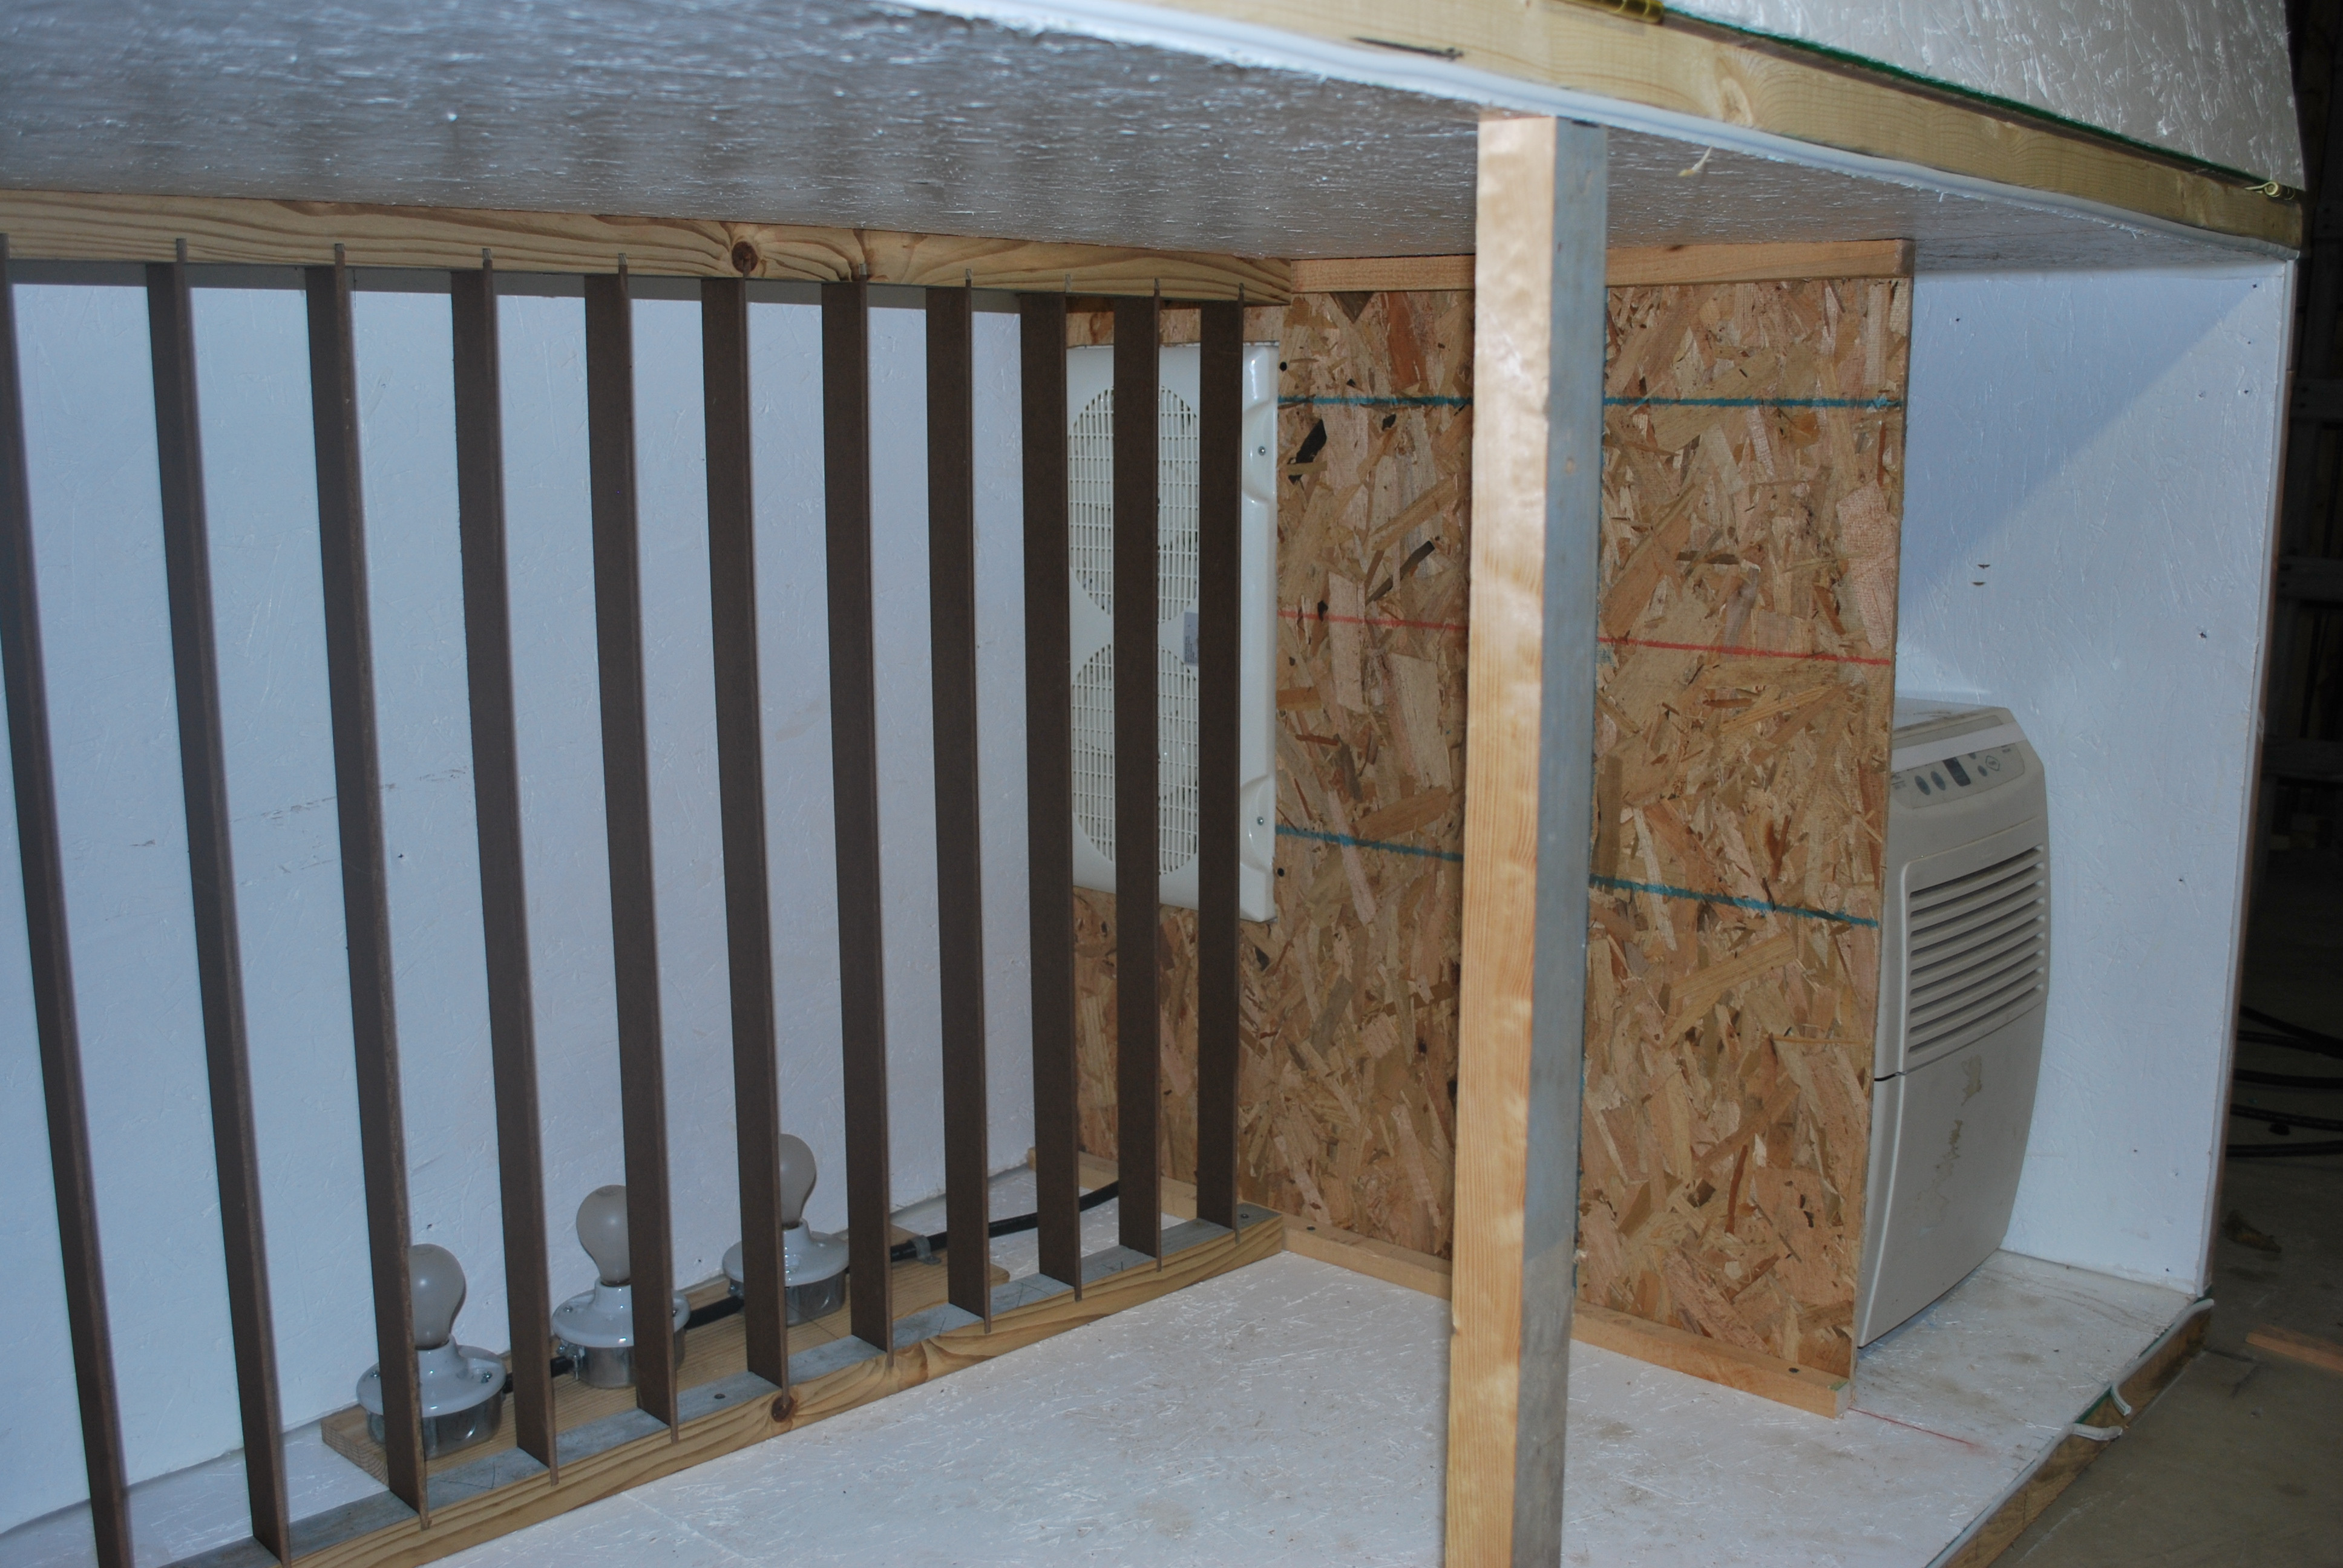 DIY Wood Drying Kiln
 Plans to build Diy Wood Kiln Dehumidifier PDF Plans